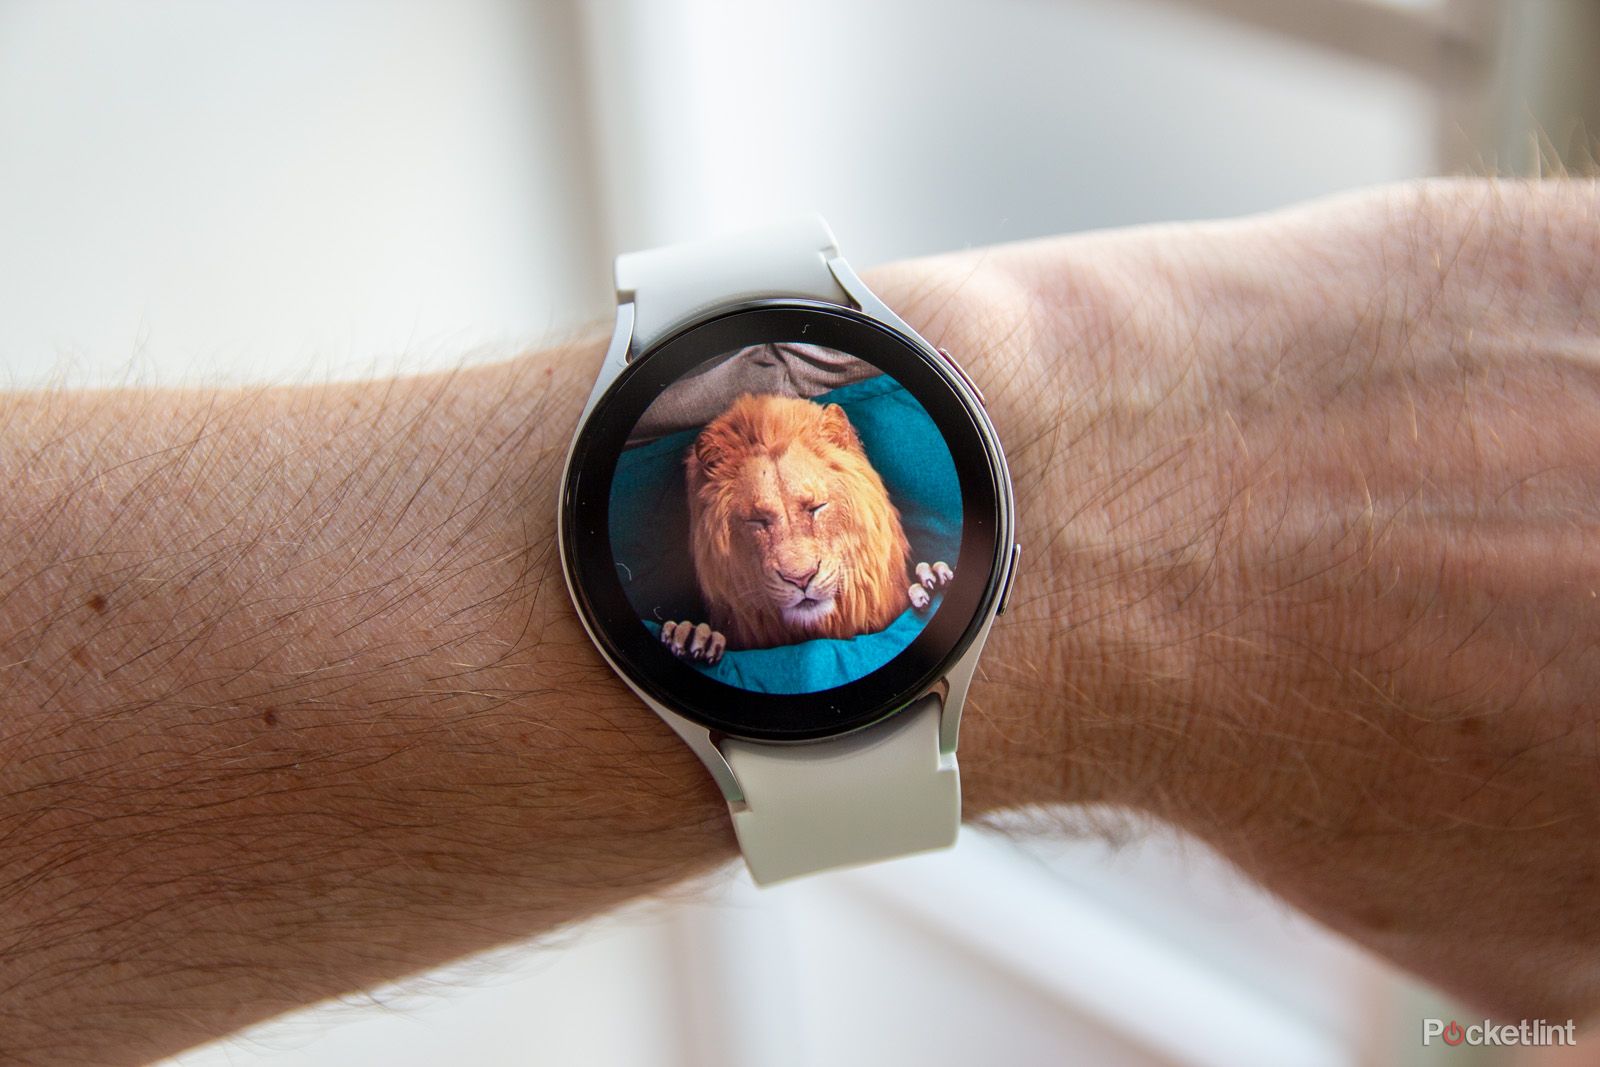 Samsung Galaxy Watch 5 with lion watchf ace